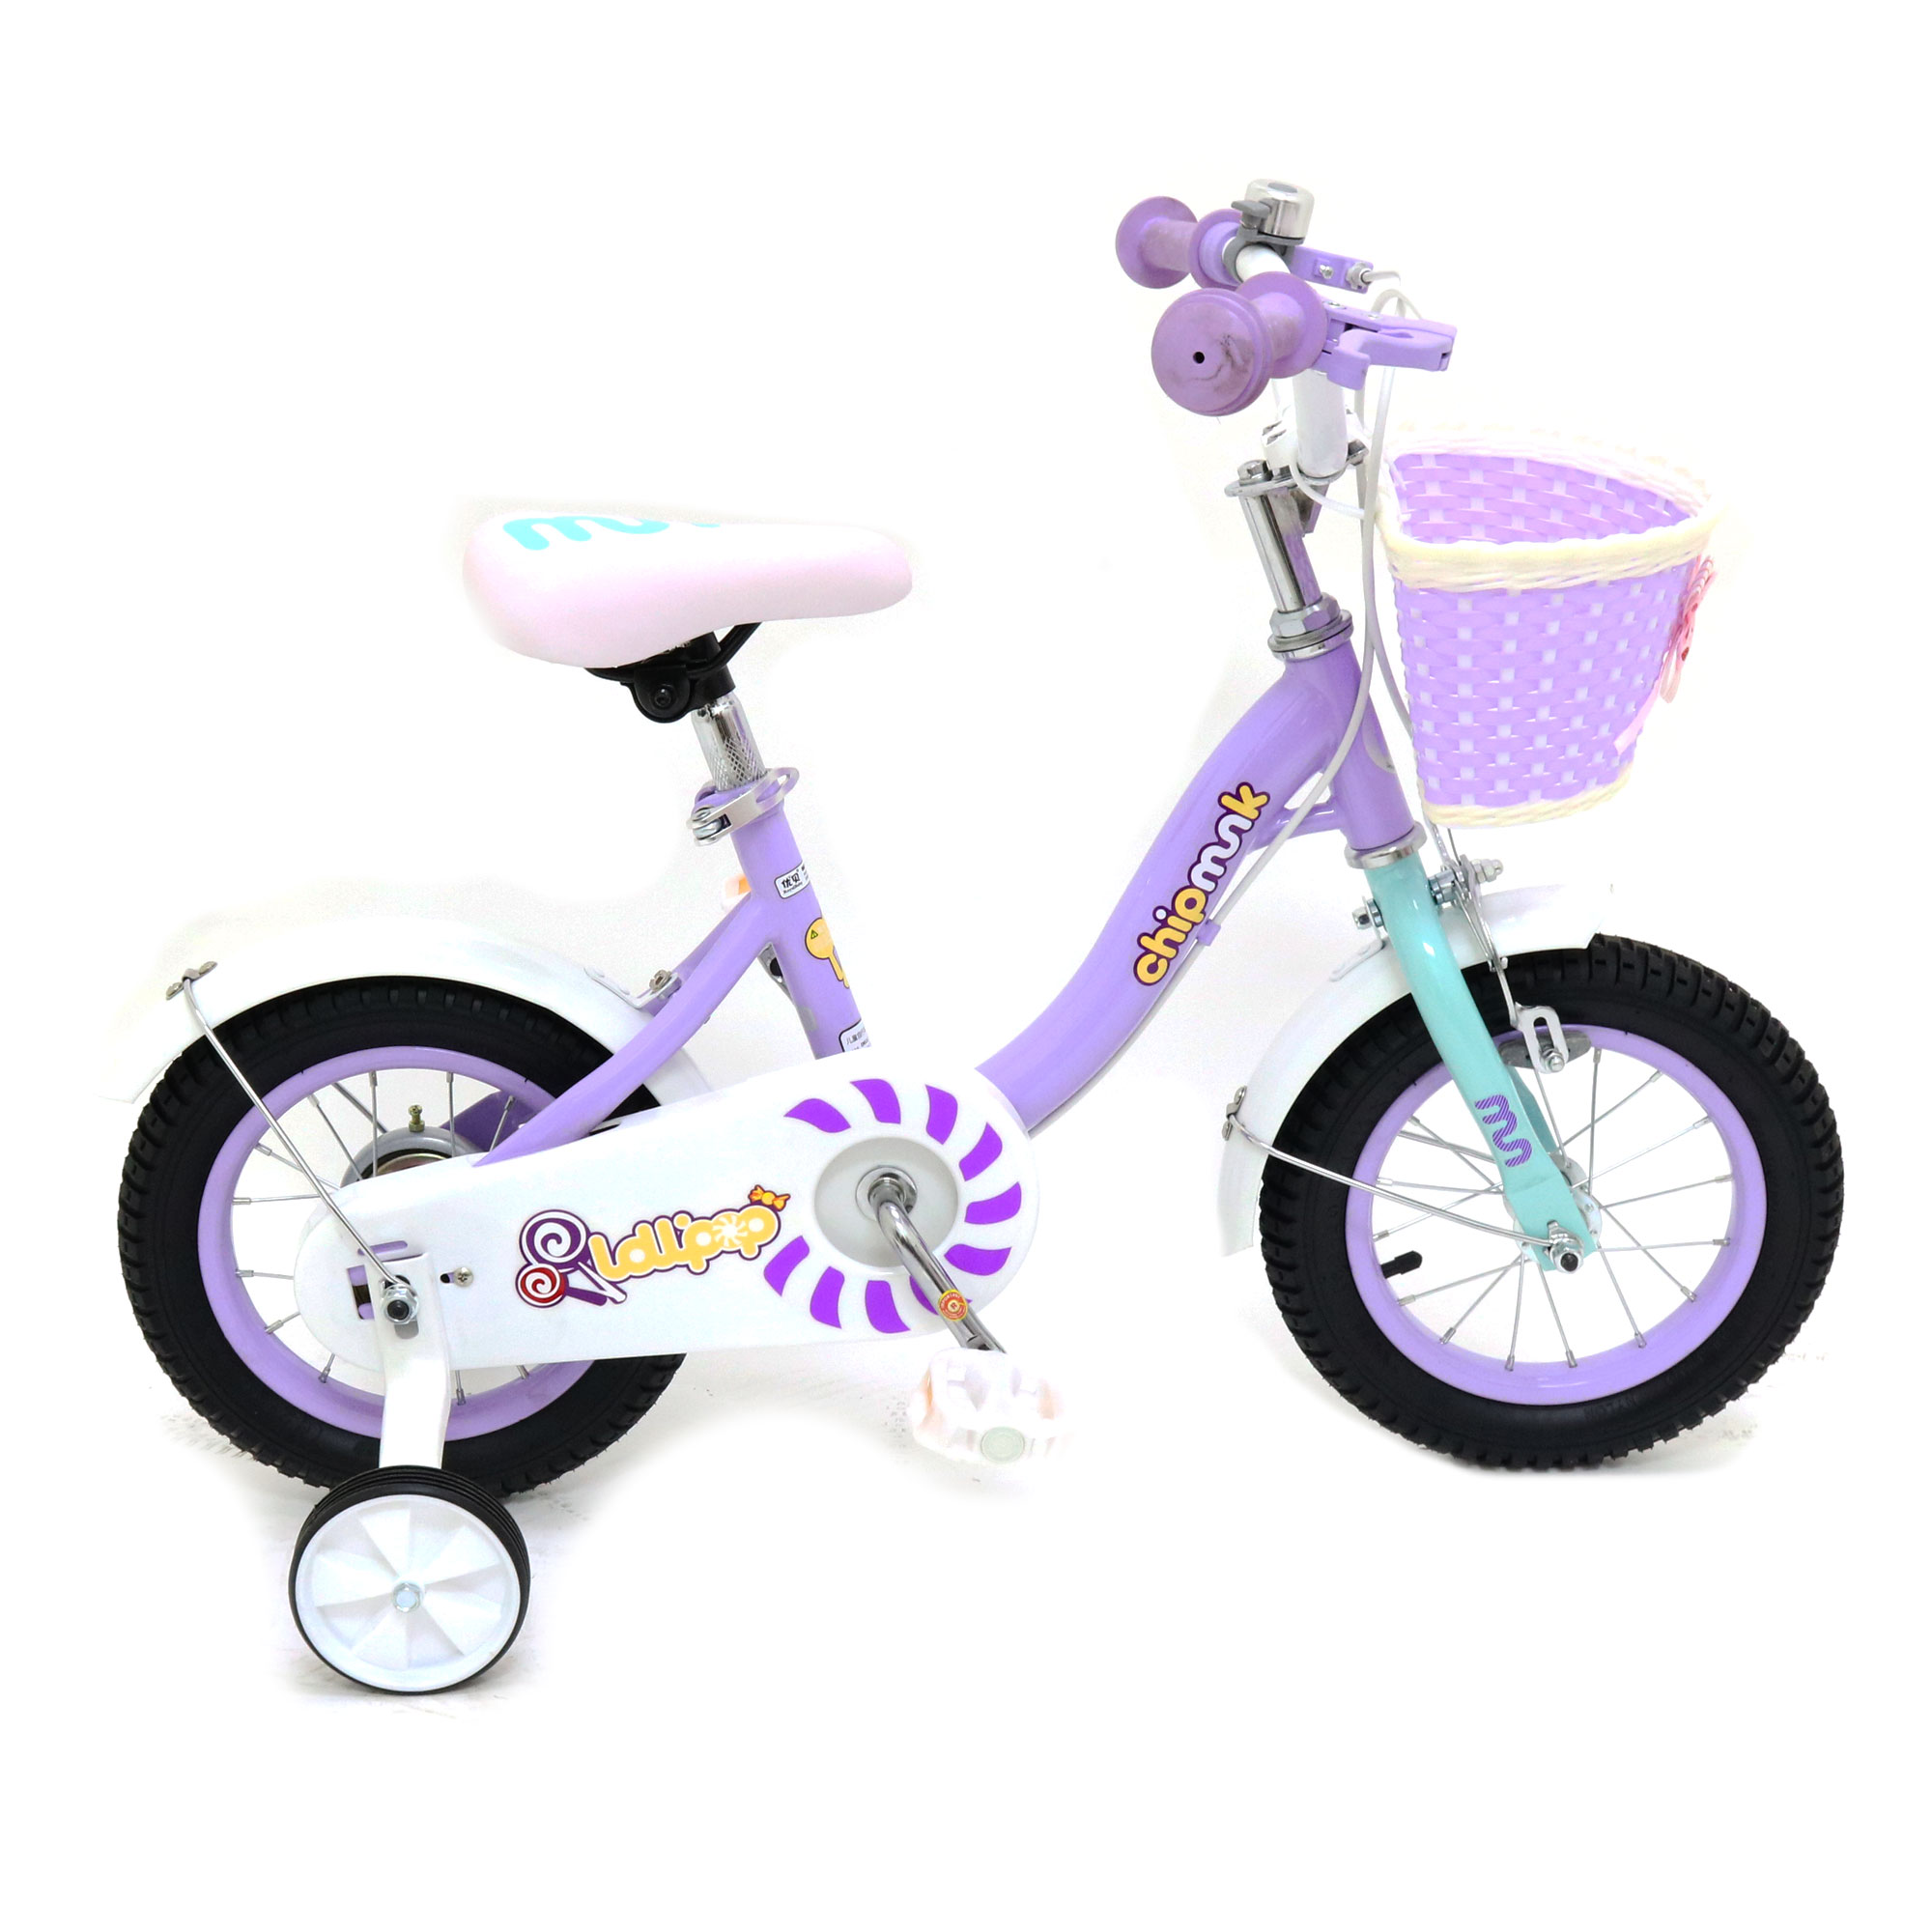 Royal Baby Bicicleta Chipmunk Niño 12 Purpura